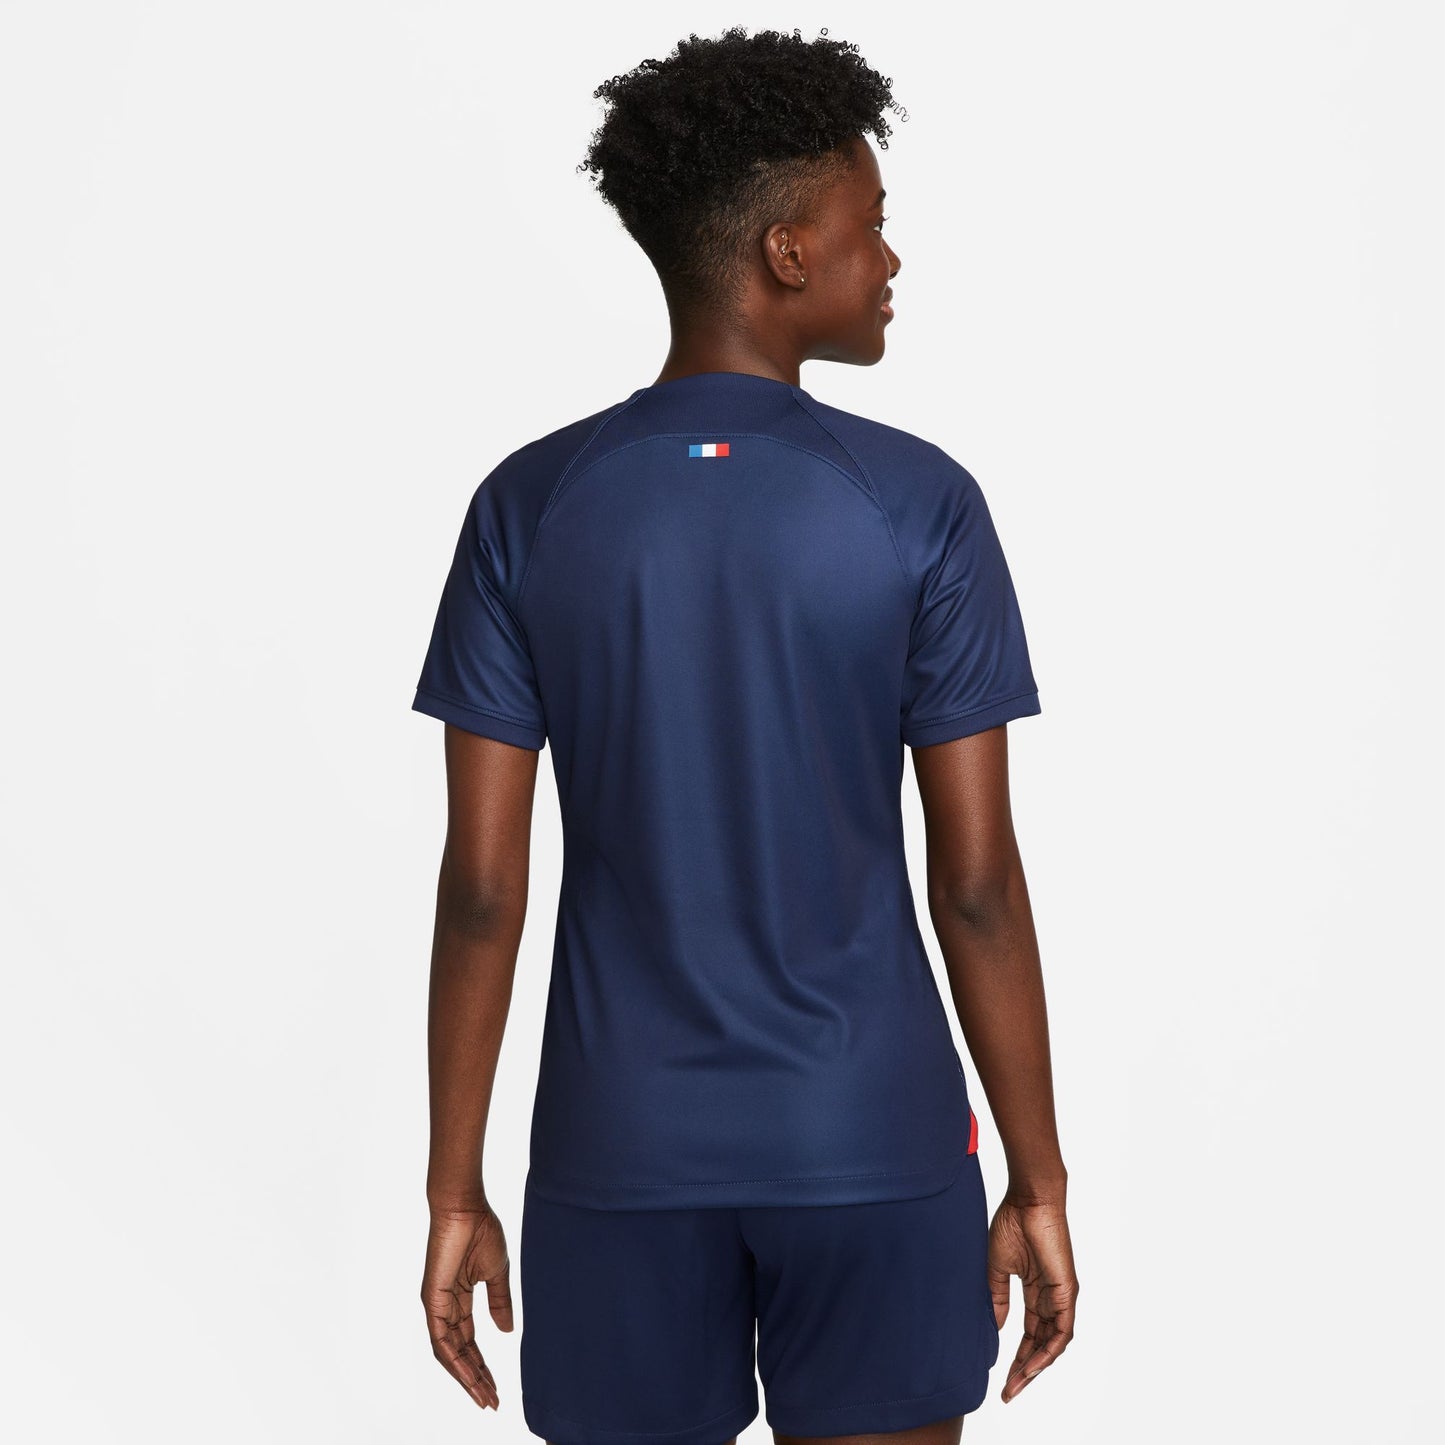 Camiseta Nike Stadium de ajuste curvo de local del París Saint-Germain 2023/24